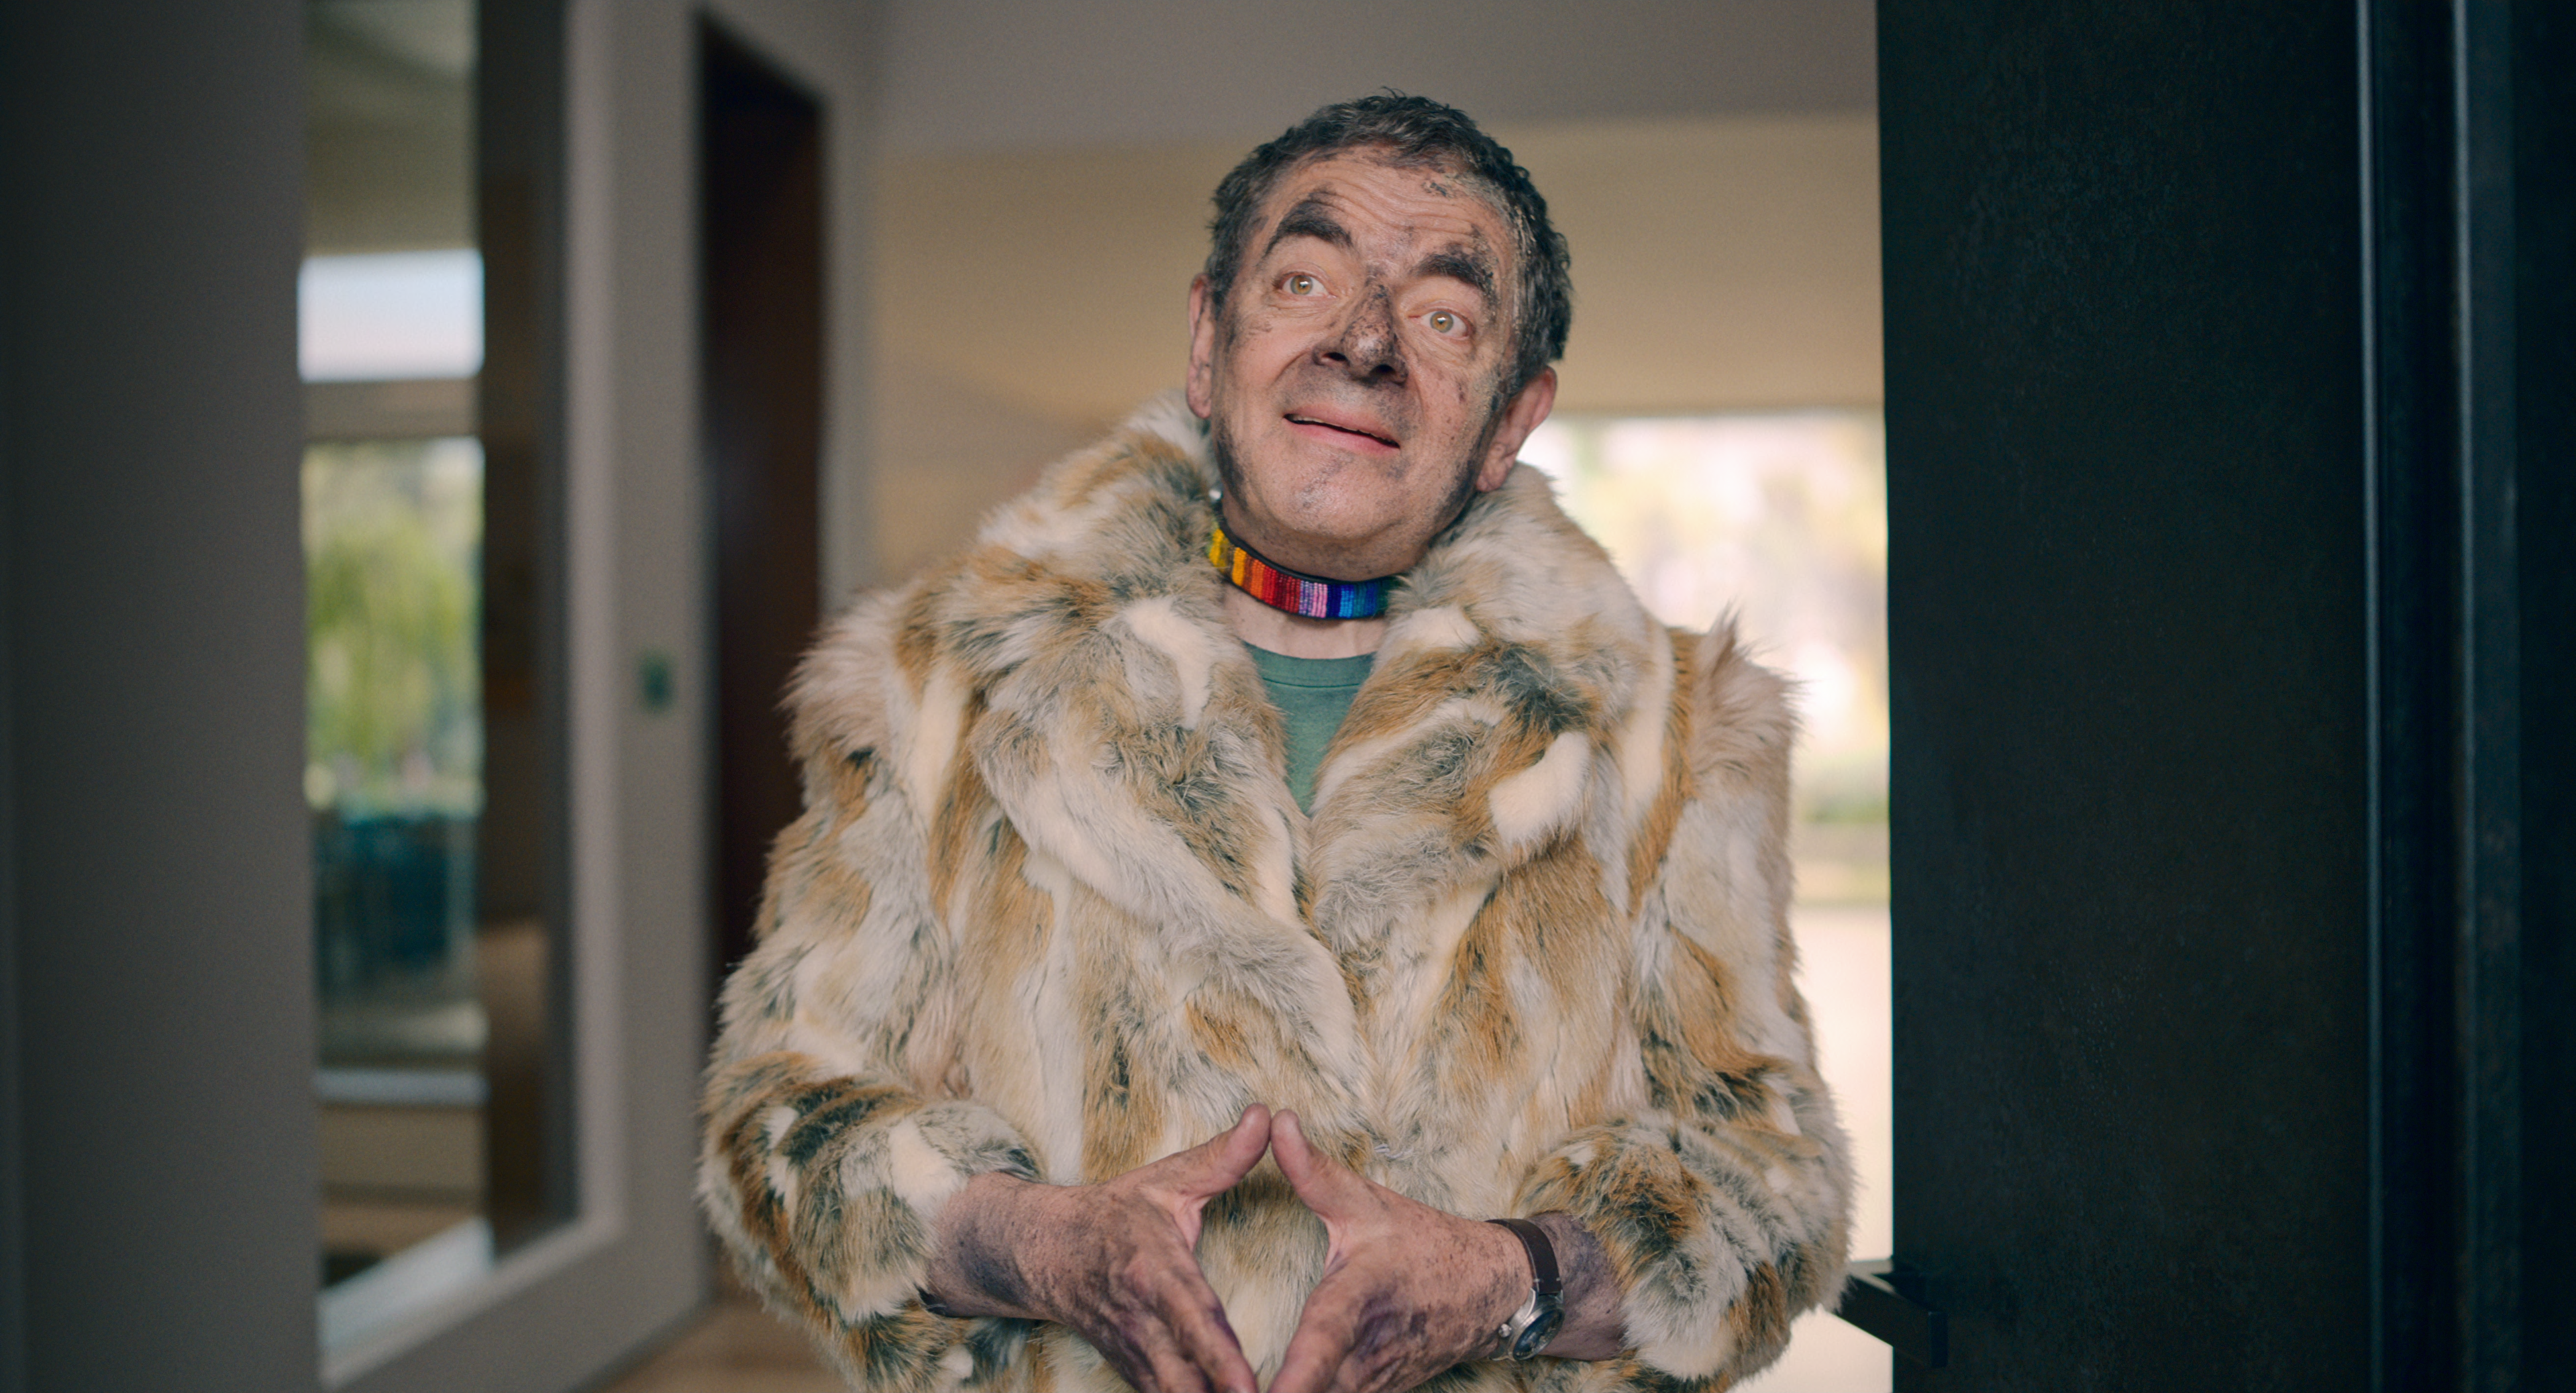 Rowan Atkinson as Trevor Bingley. (Image courtesy of Netflix)